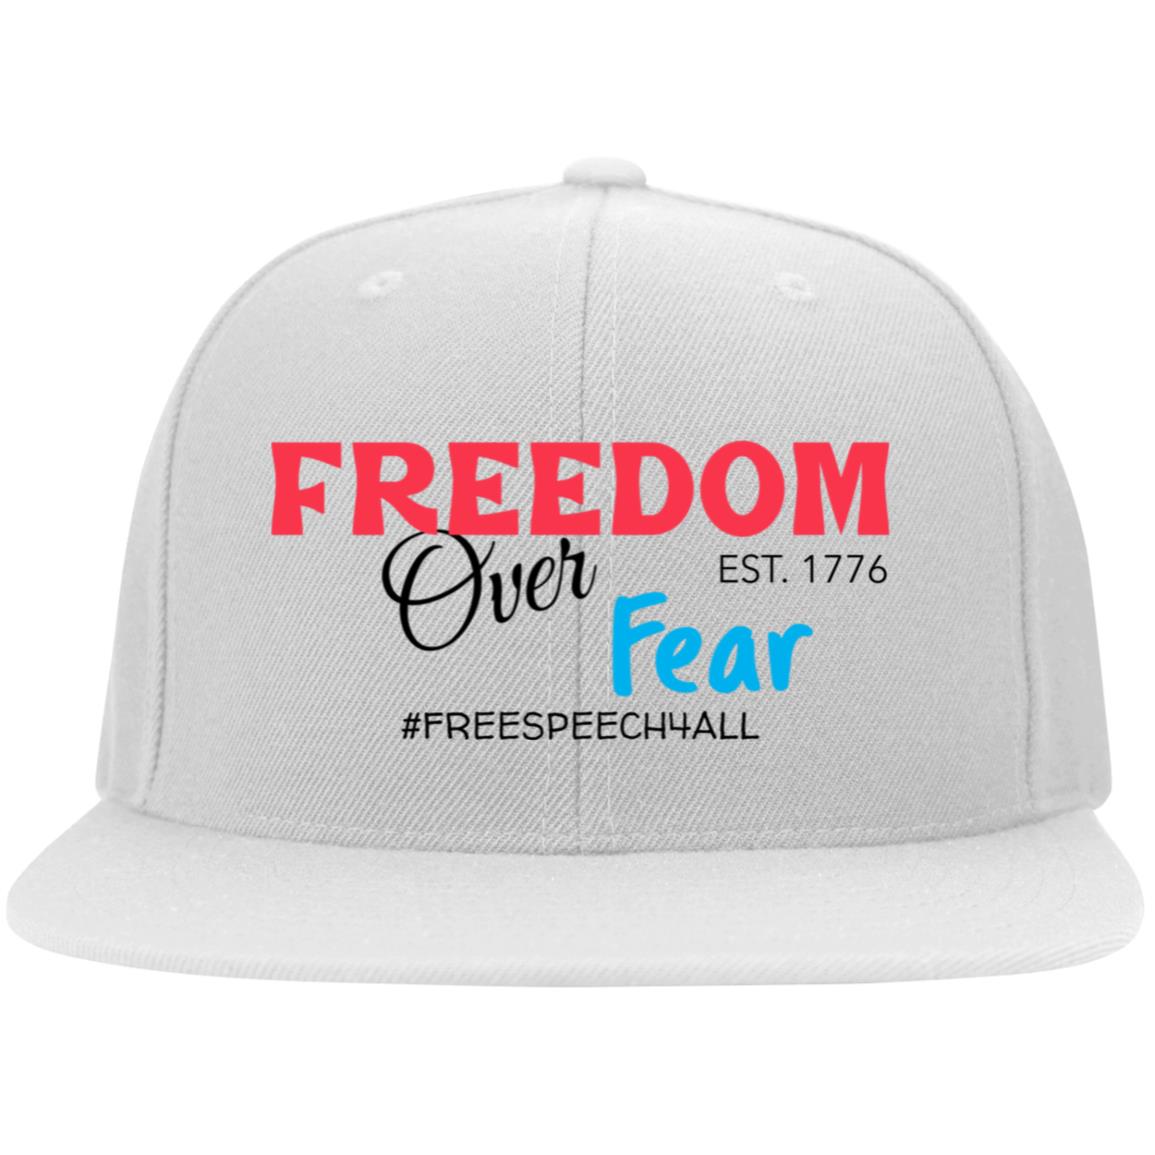 Freedom Over Fear Embroidered Flat Bill Twill Flexfit Cap